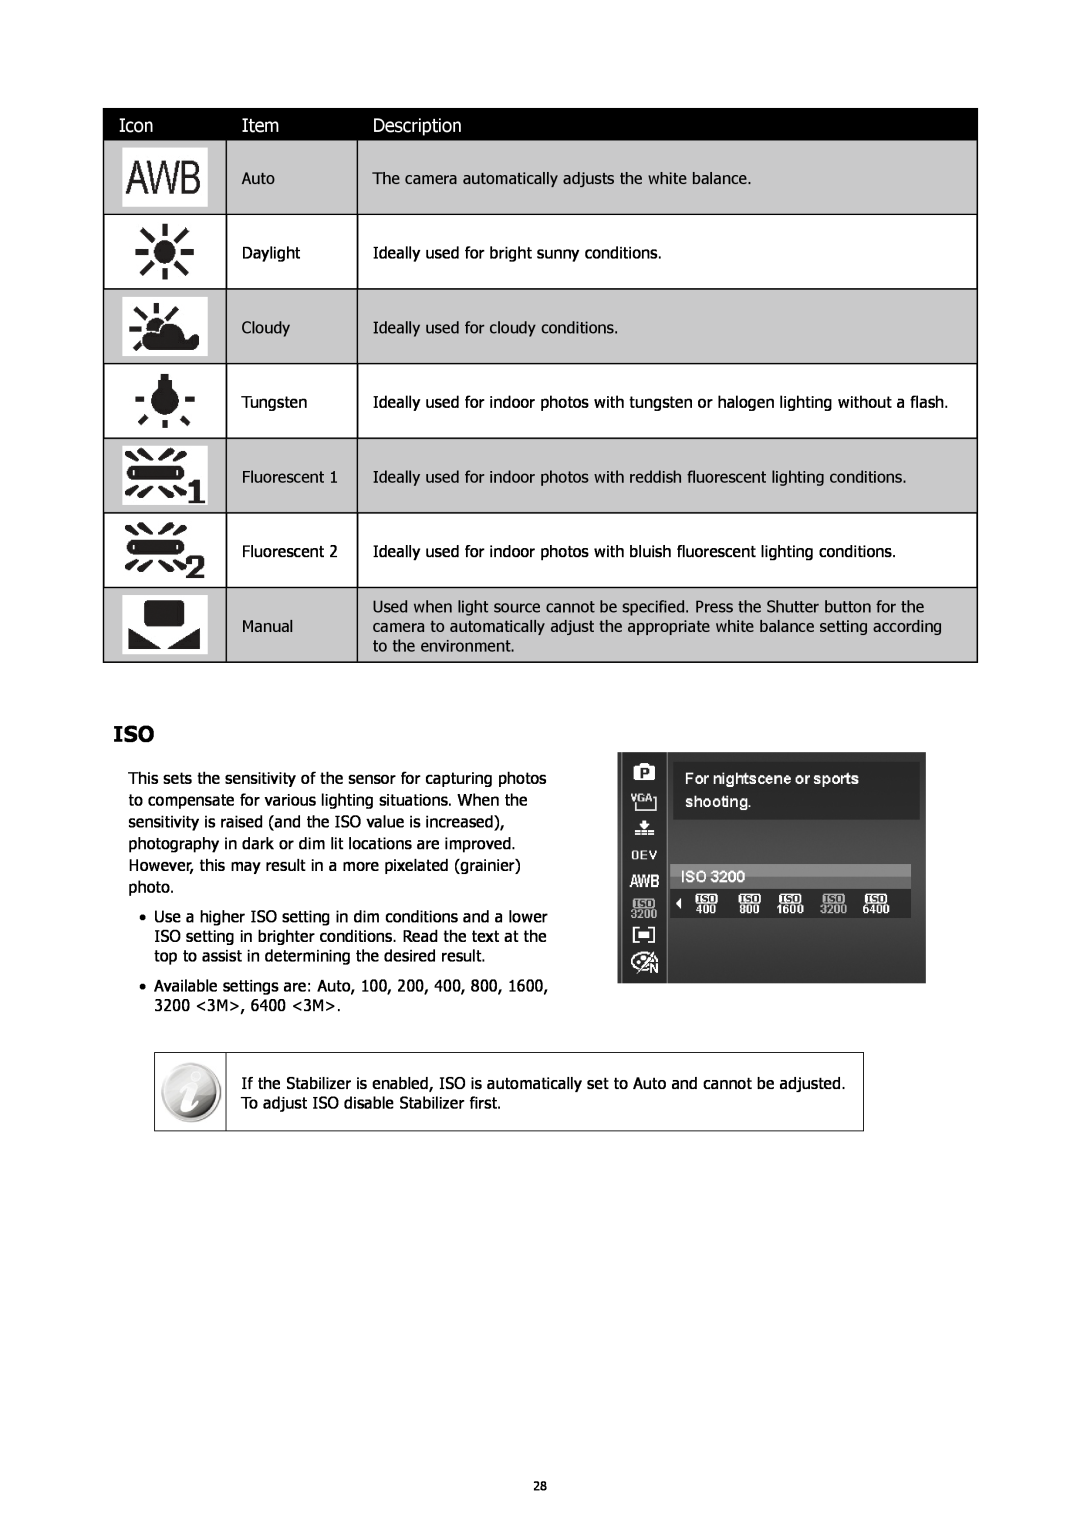 HP SW450 manual Icon, Description 